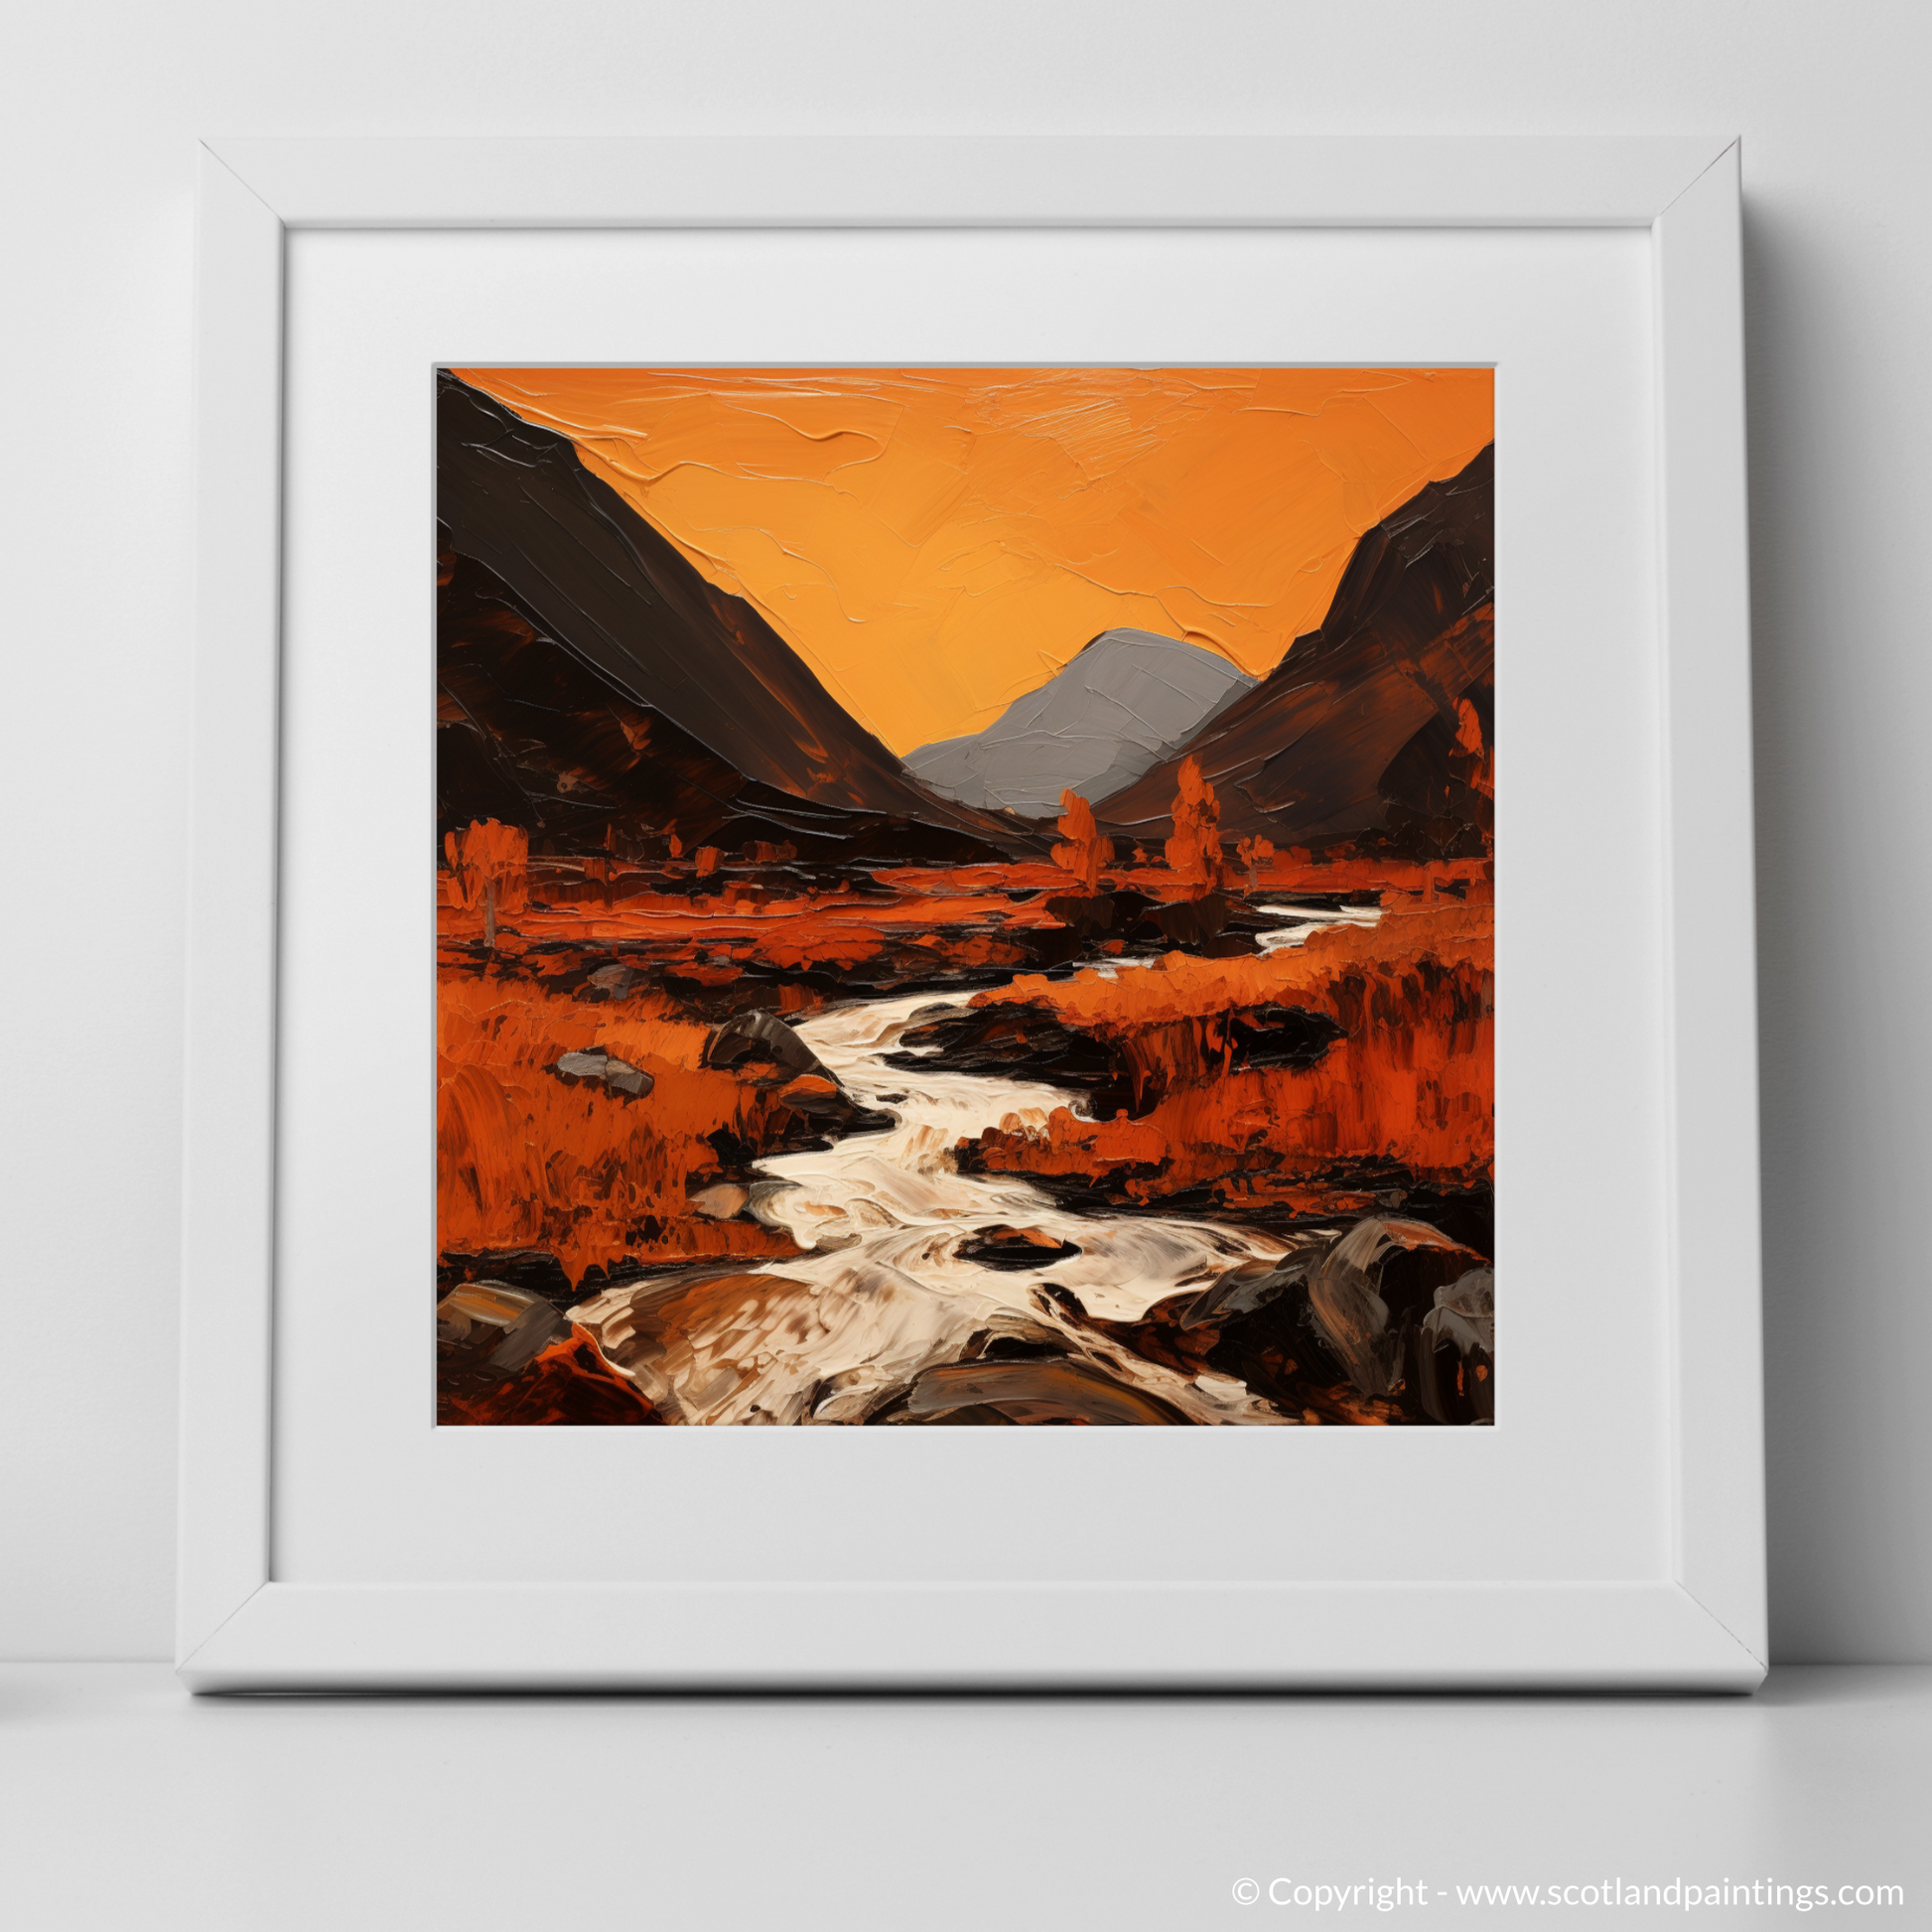 Art Print of Autumn hues in Glencoe with a white frame